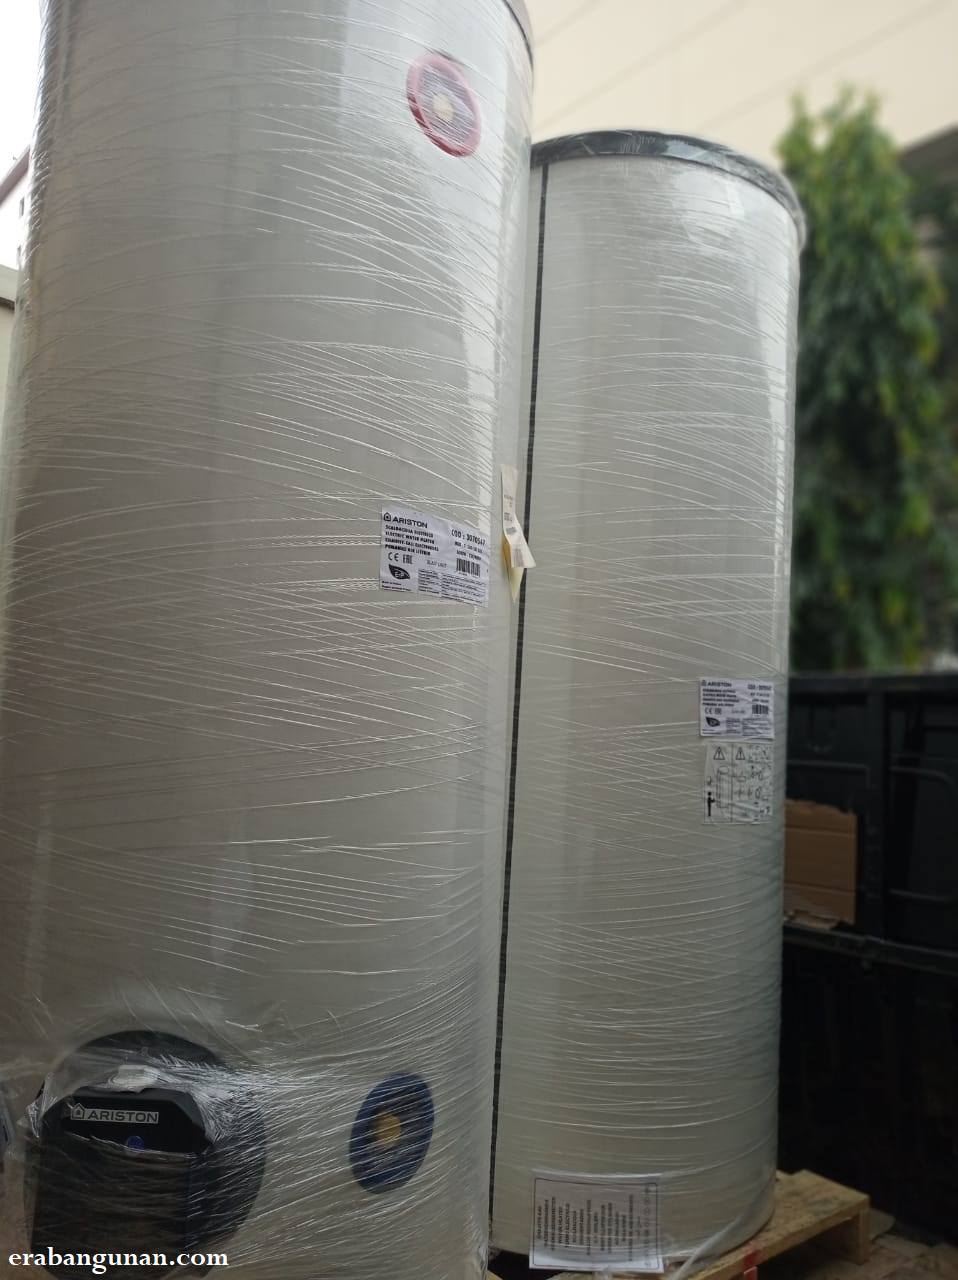 Ariston TI STI 500 EU2 Water Heater 500L | Supply Master | Accra, Ghana Water Heater Buy Tools hardware Building materials